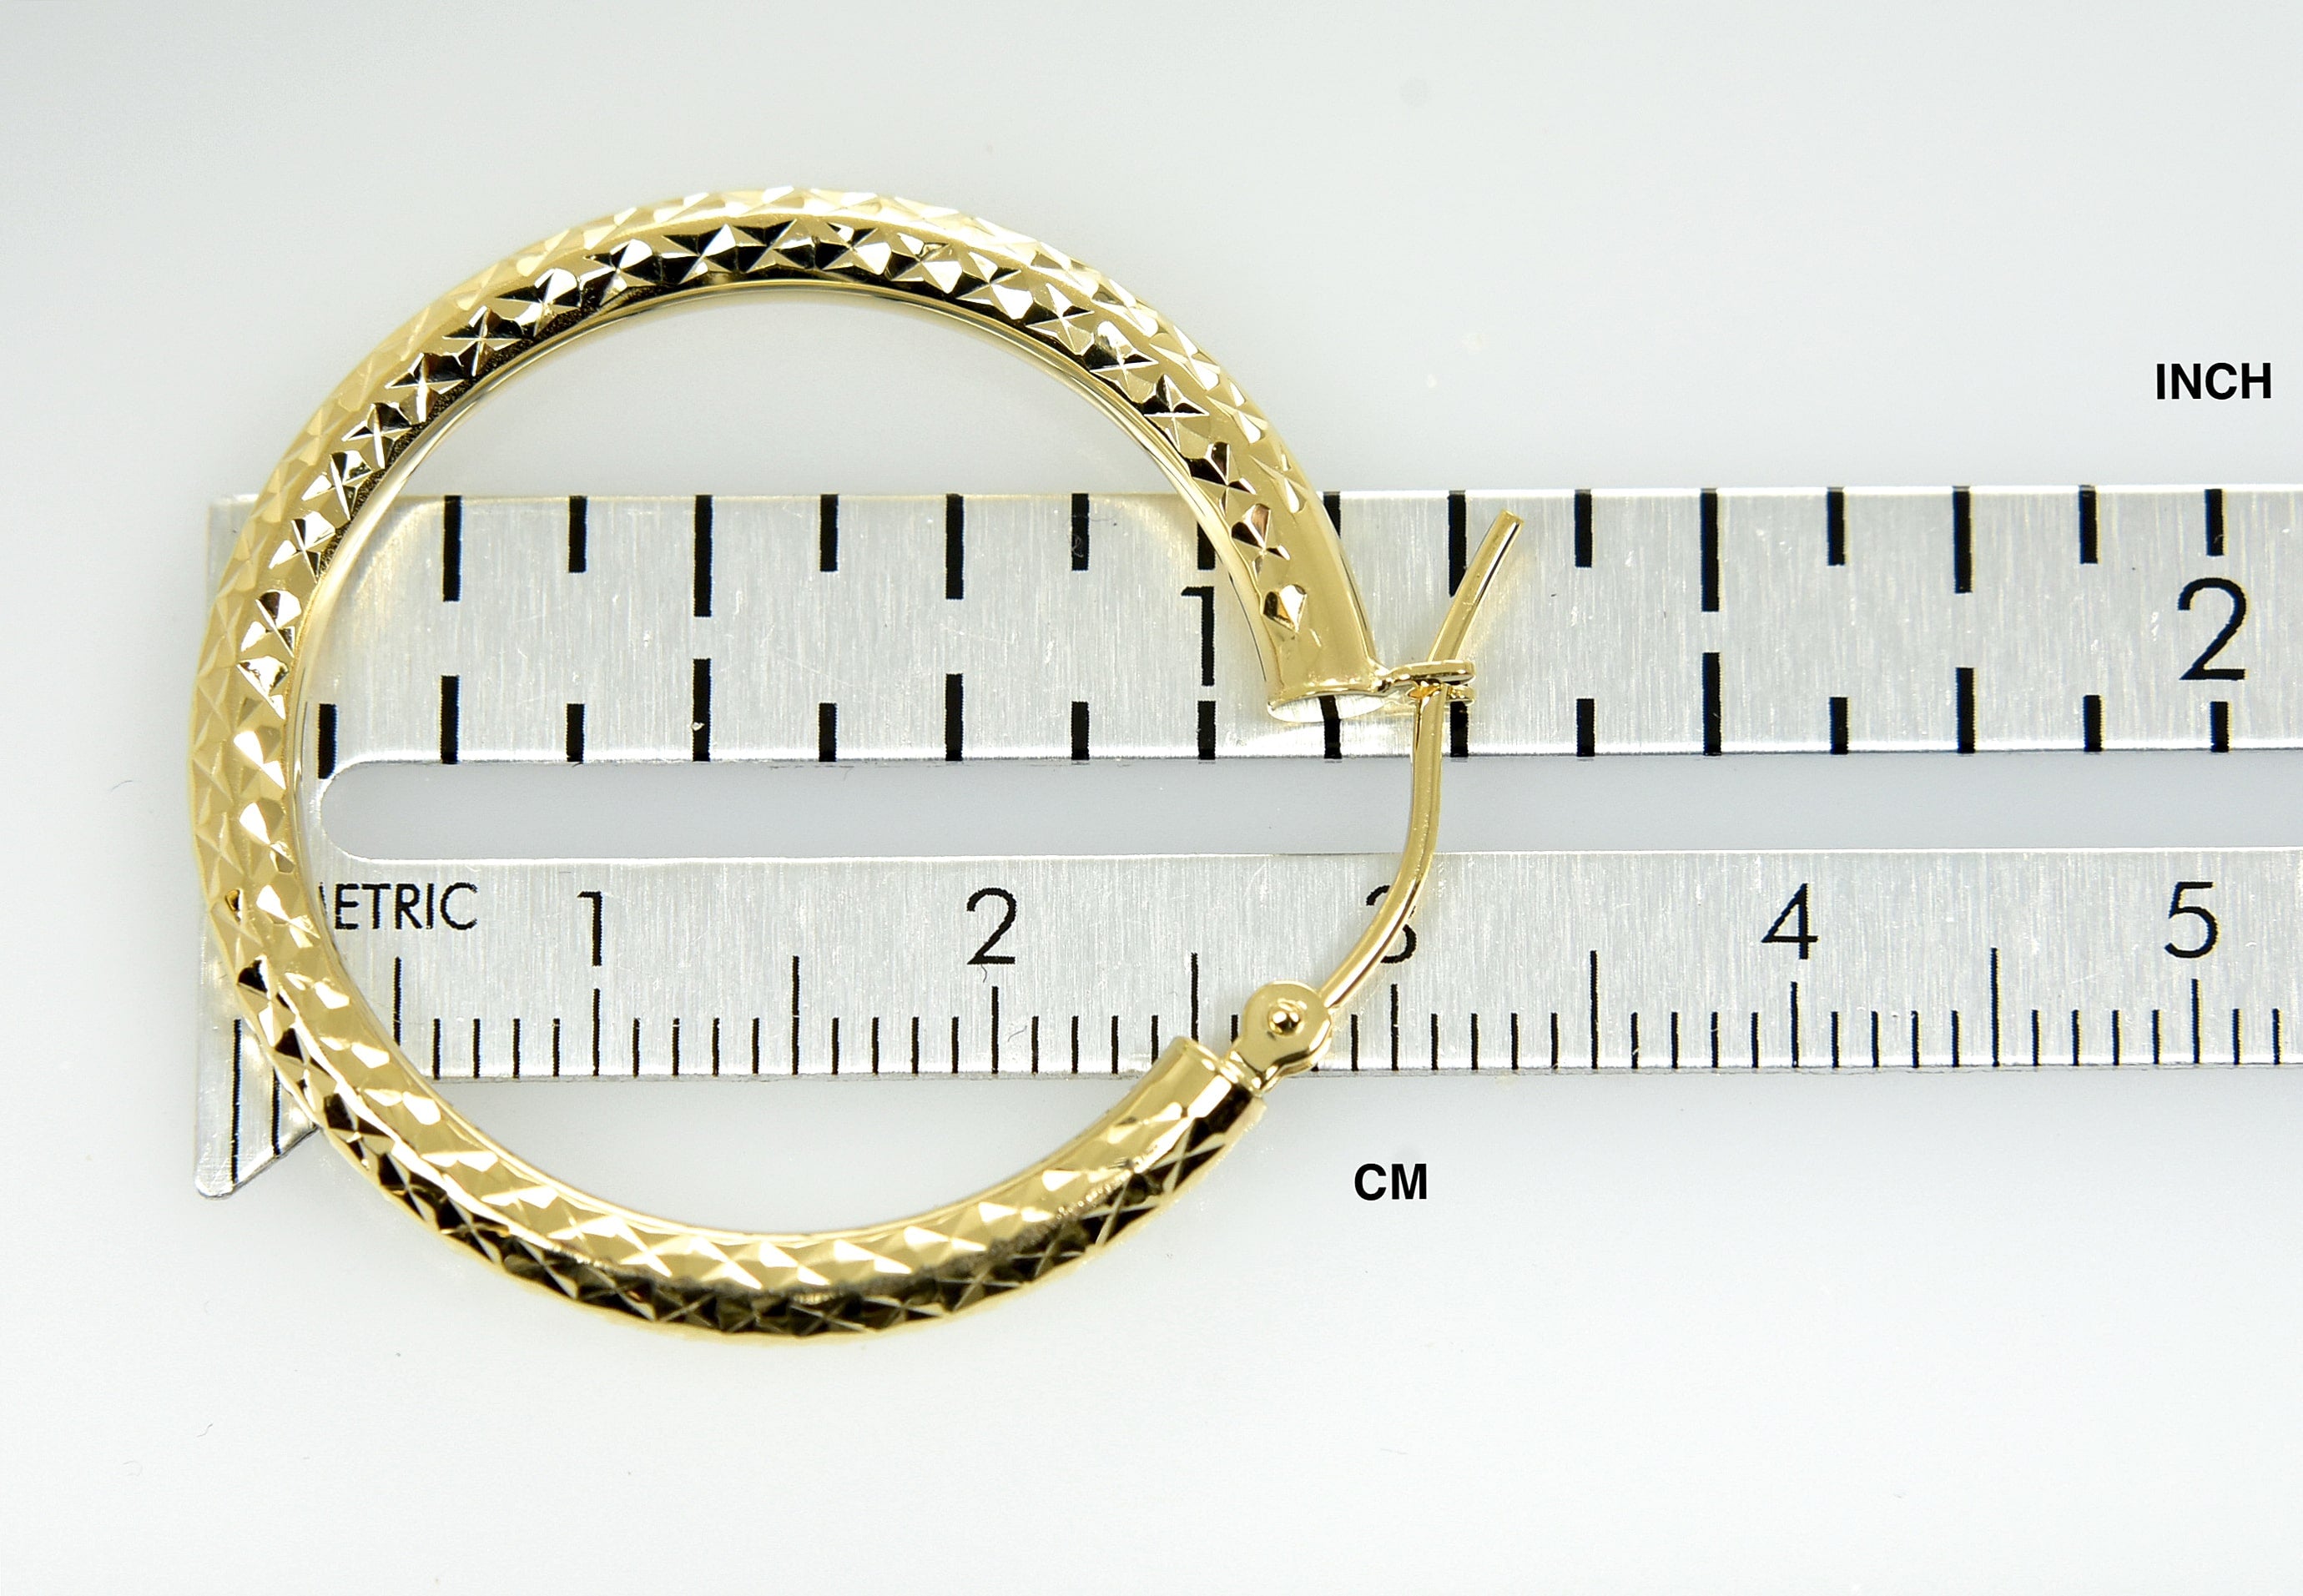 14K Yellow Gold Diamond Cut Classic Round Hoop Earrings 30mm x 3mm